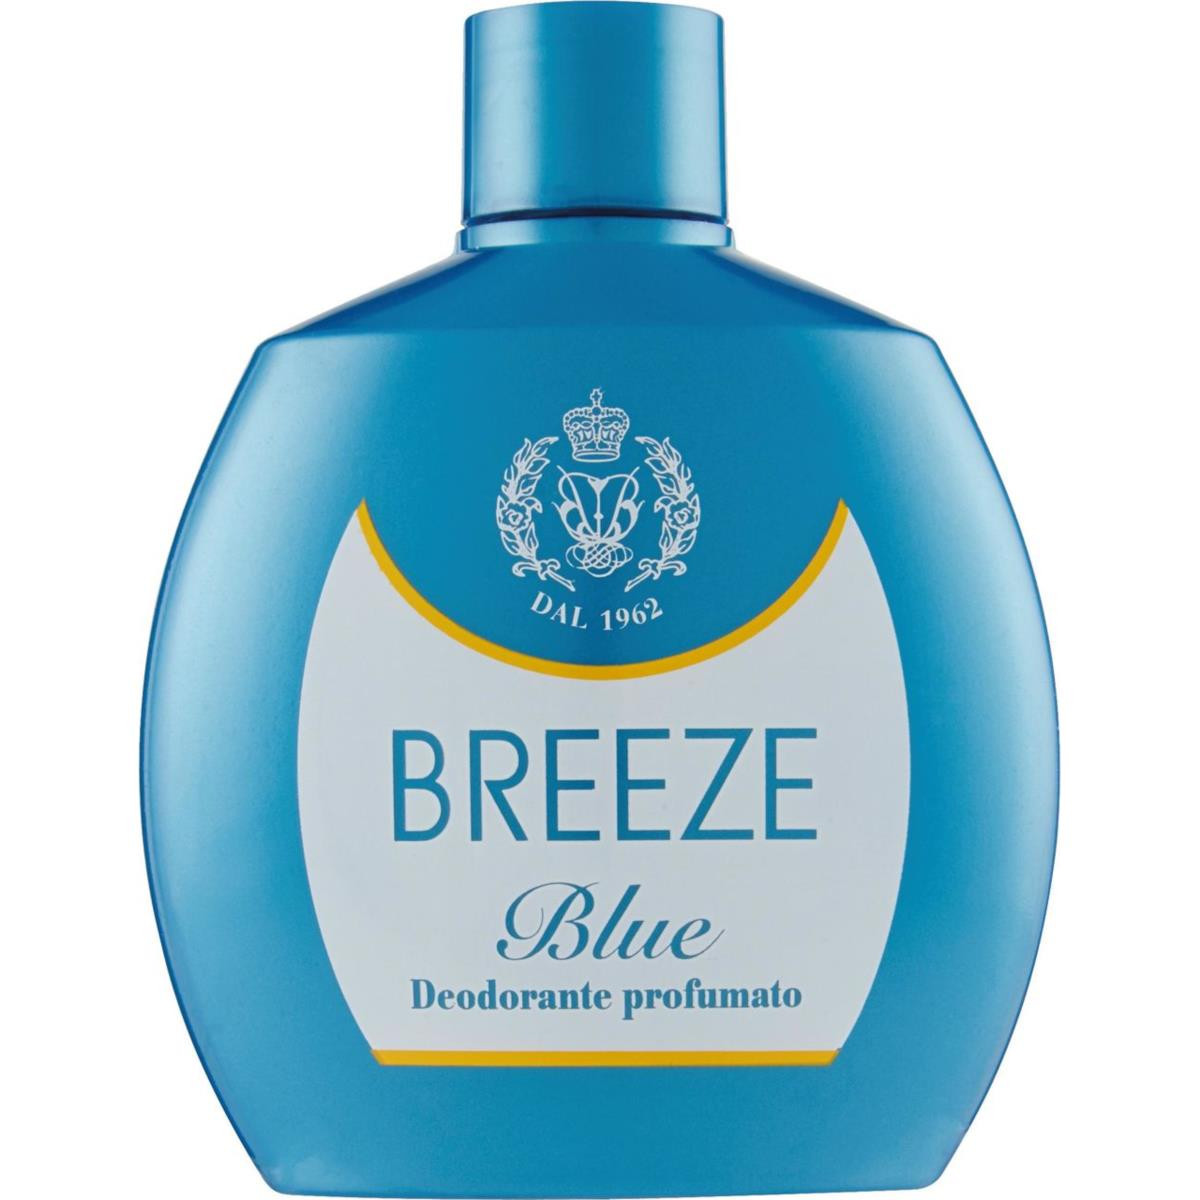 Breeze Blue Deodorante Profumato 100ml